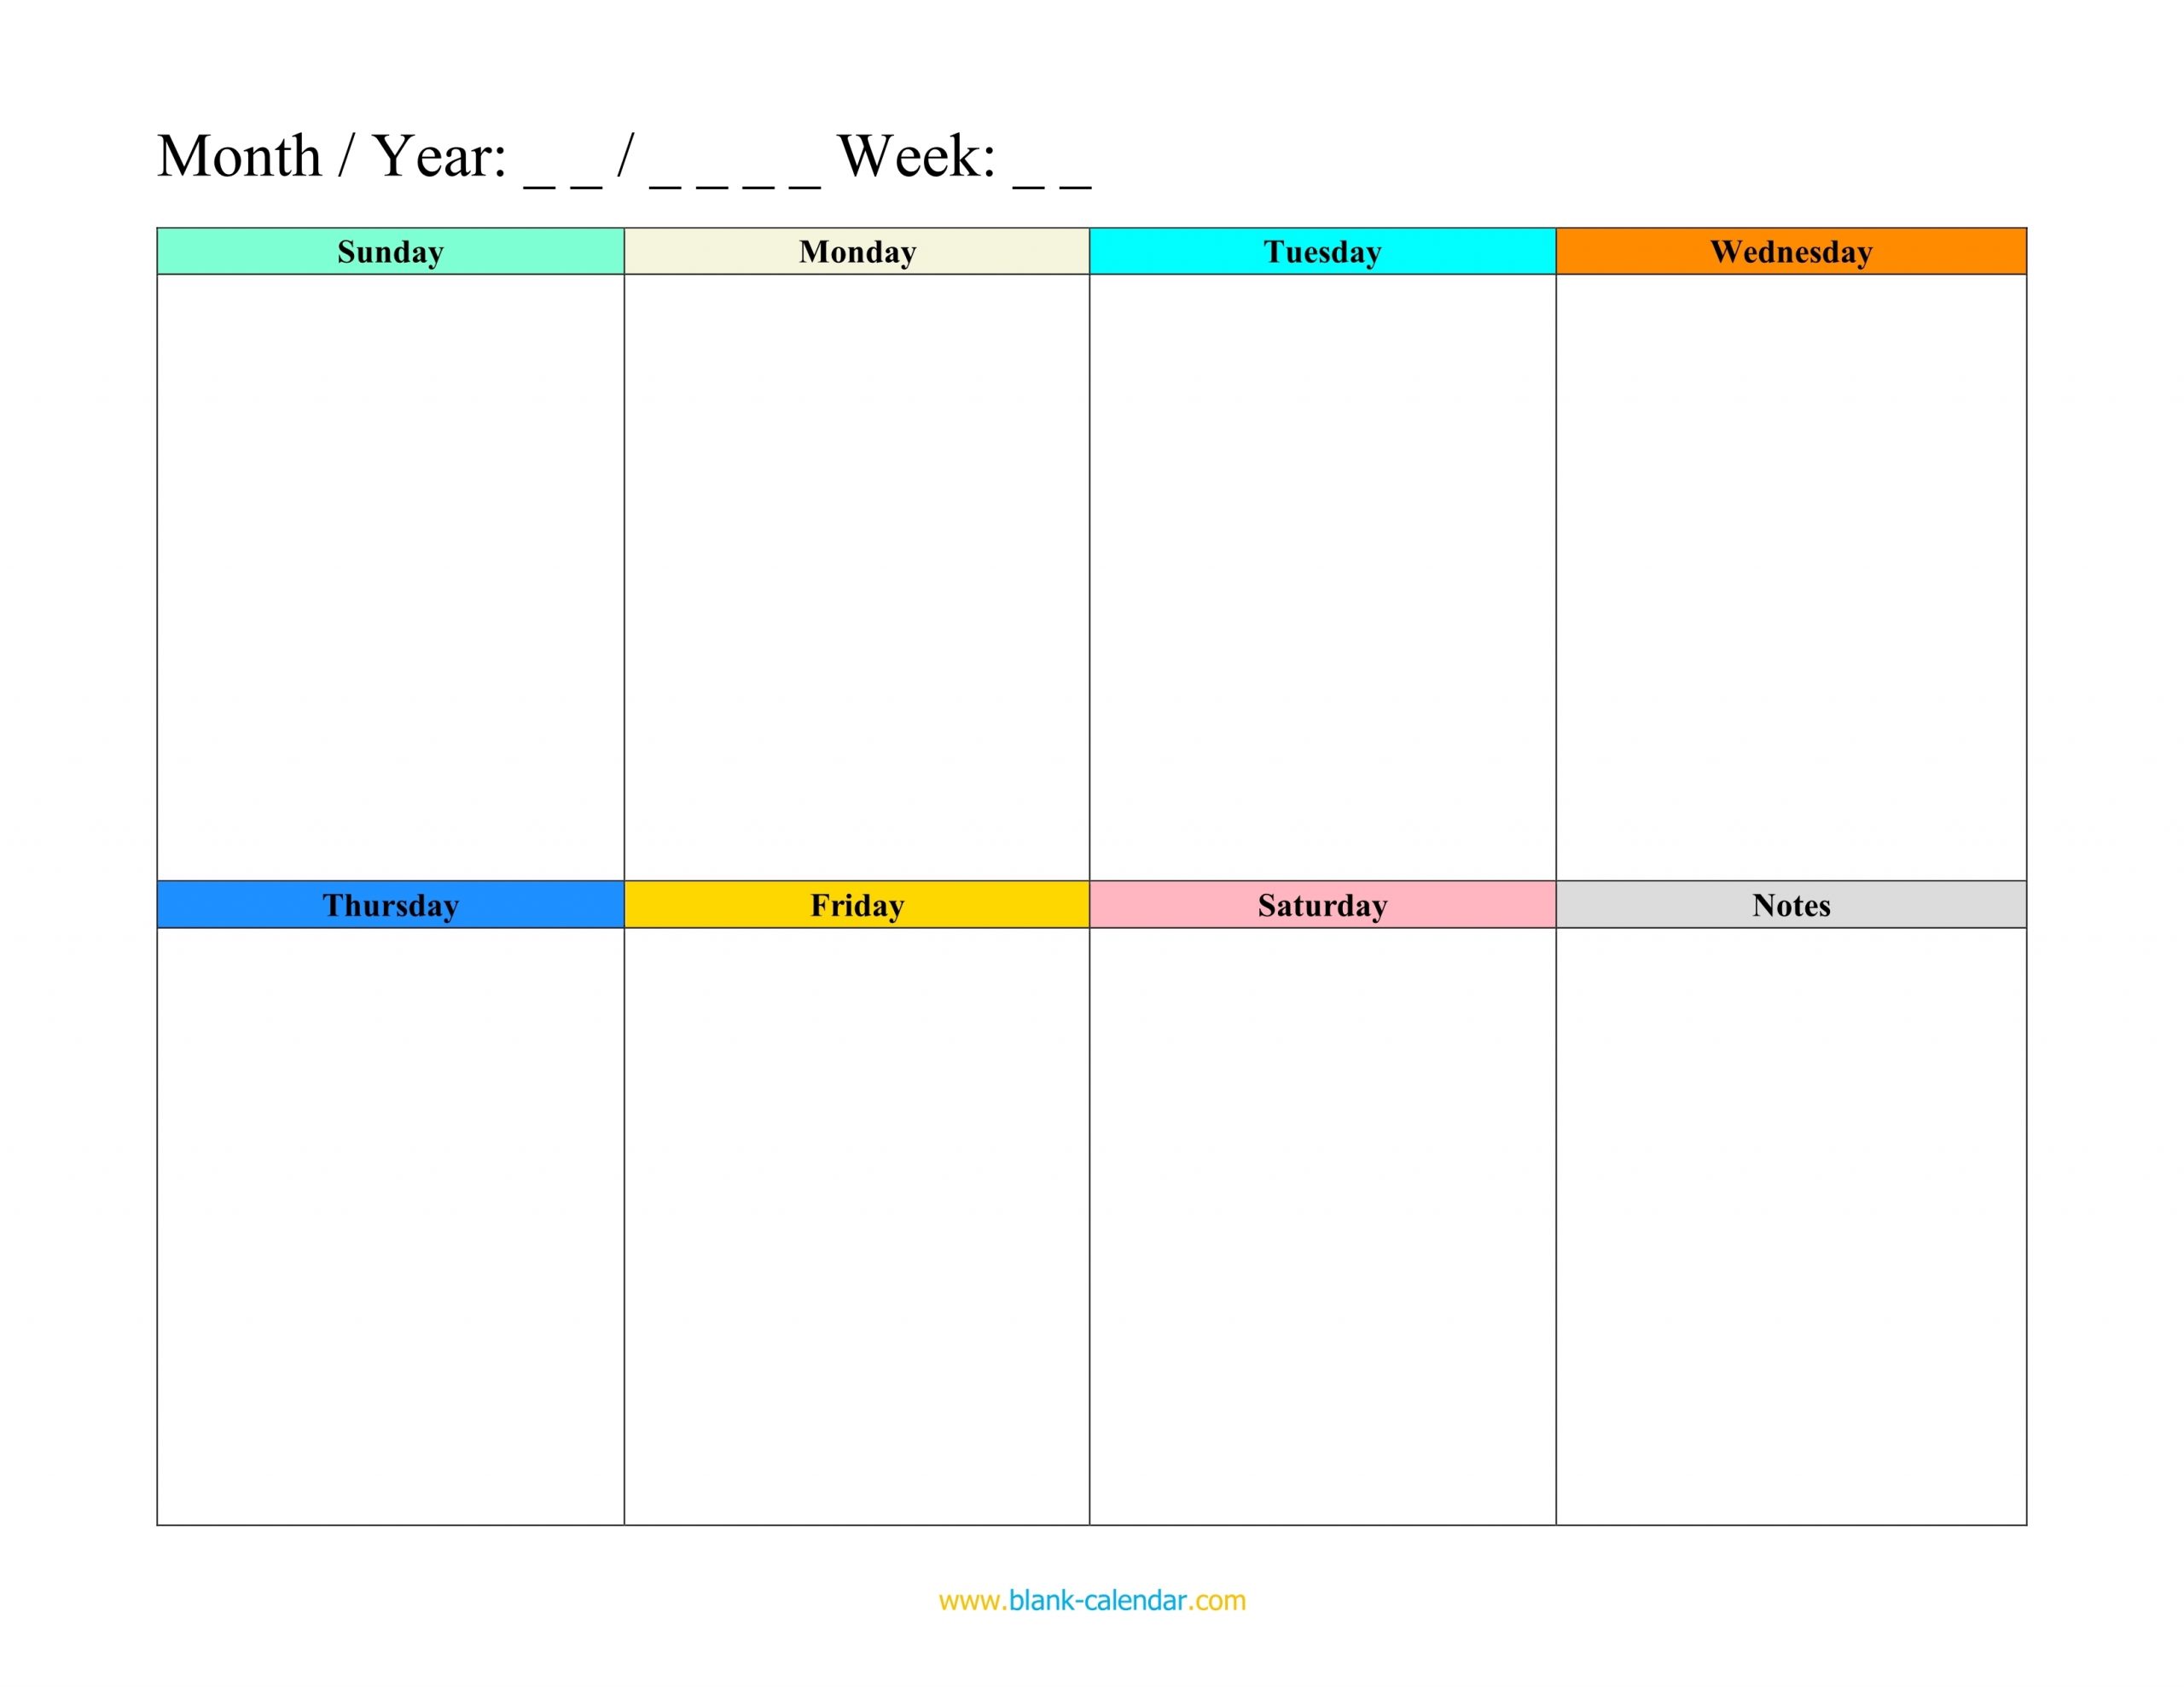 Weekly Schedule Planner Templates (Word, Excel, Pdf)